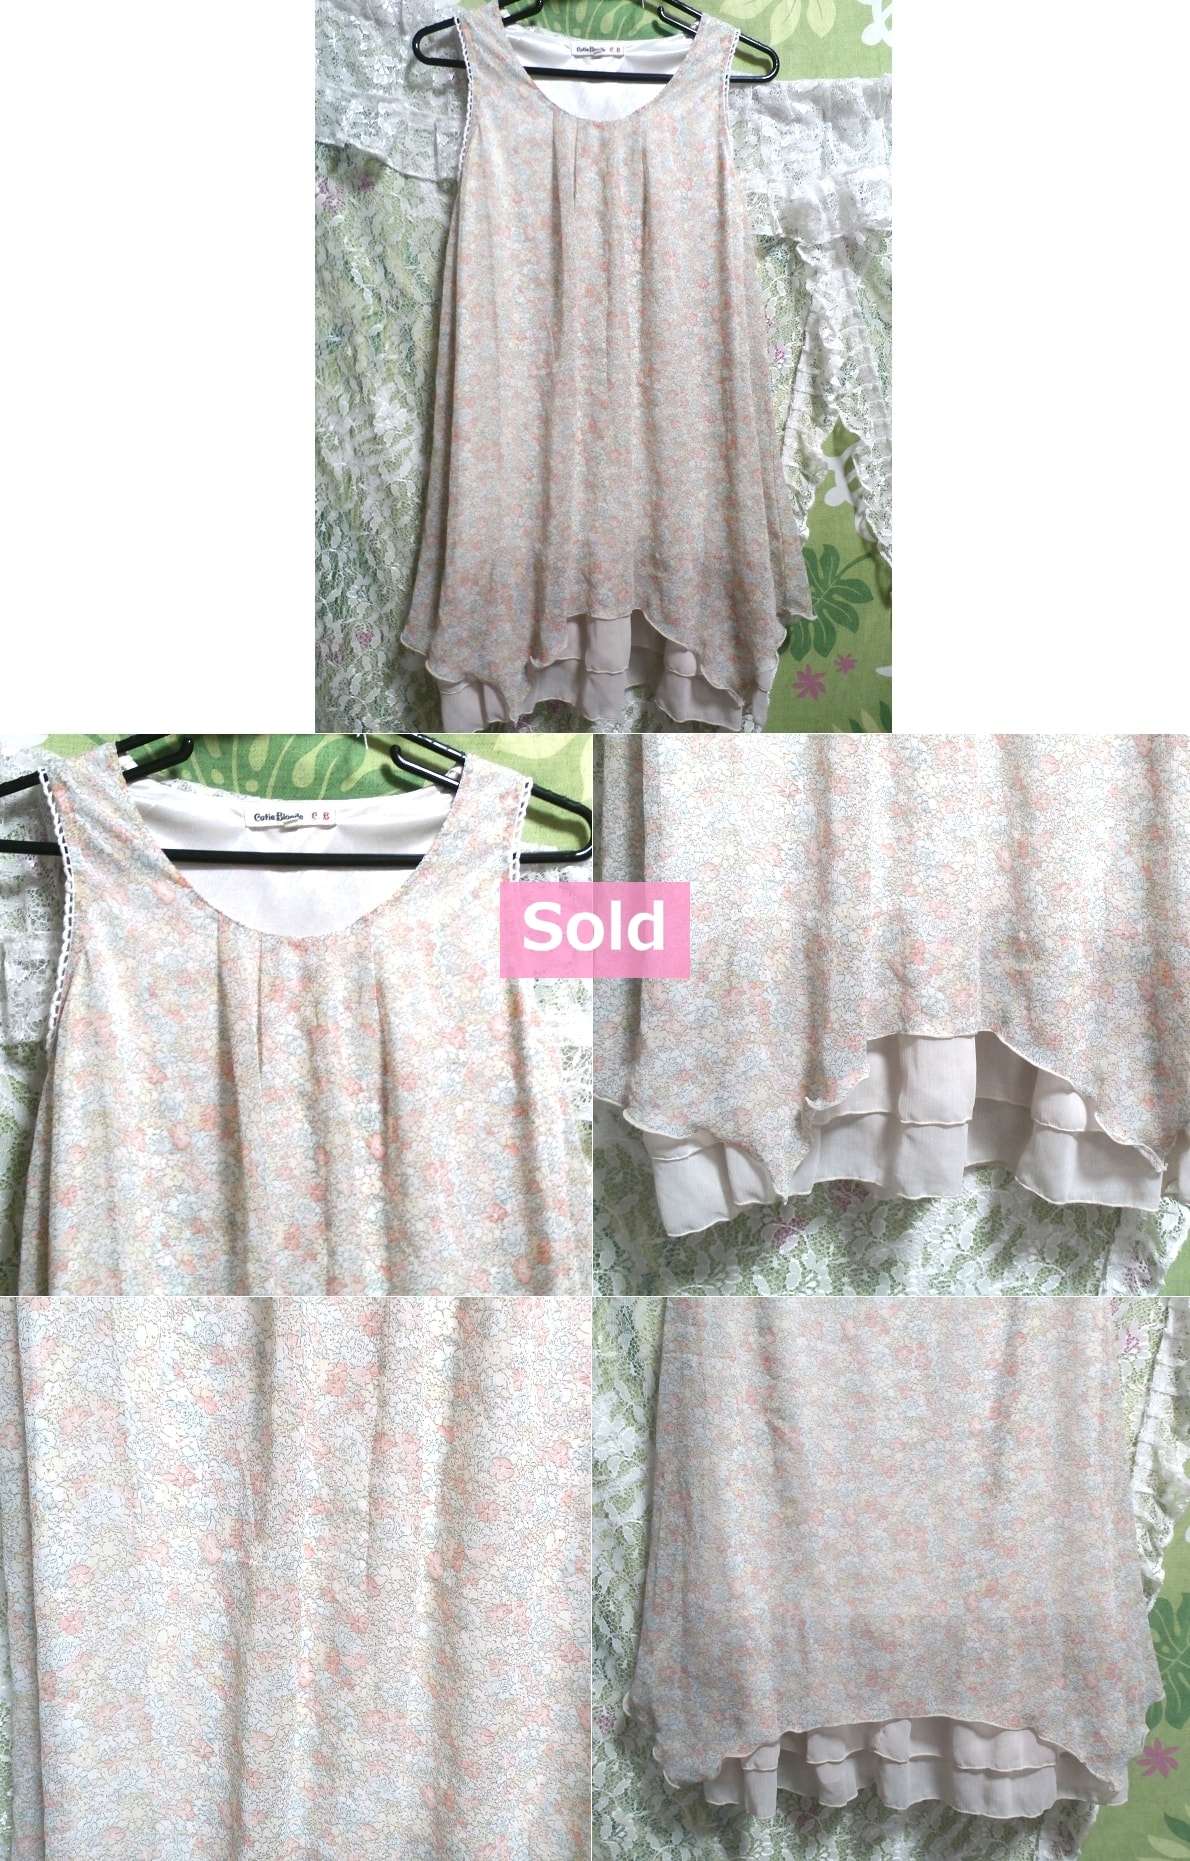 Pale floral two-tiered frilled skirt / chiffon / camisole / sleeveless / tunic / dress Ruffle skirt / chiffon / camisole / tunic / onepiece